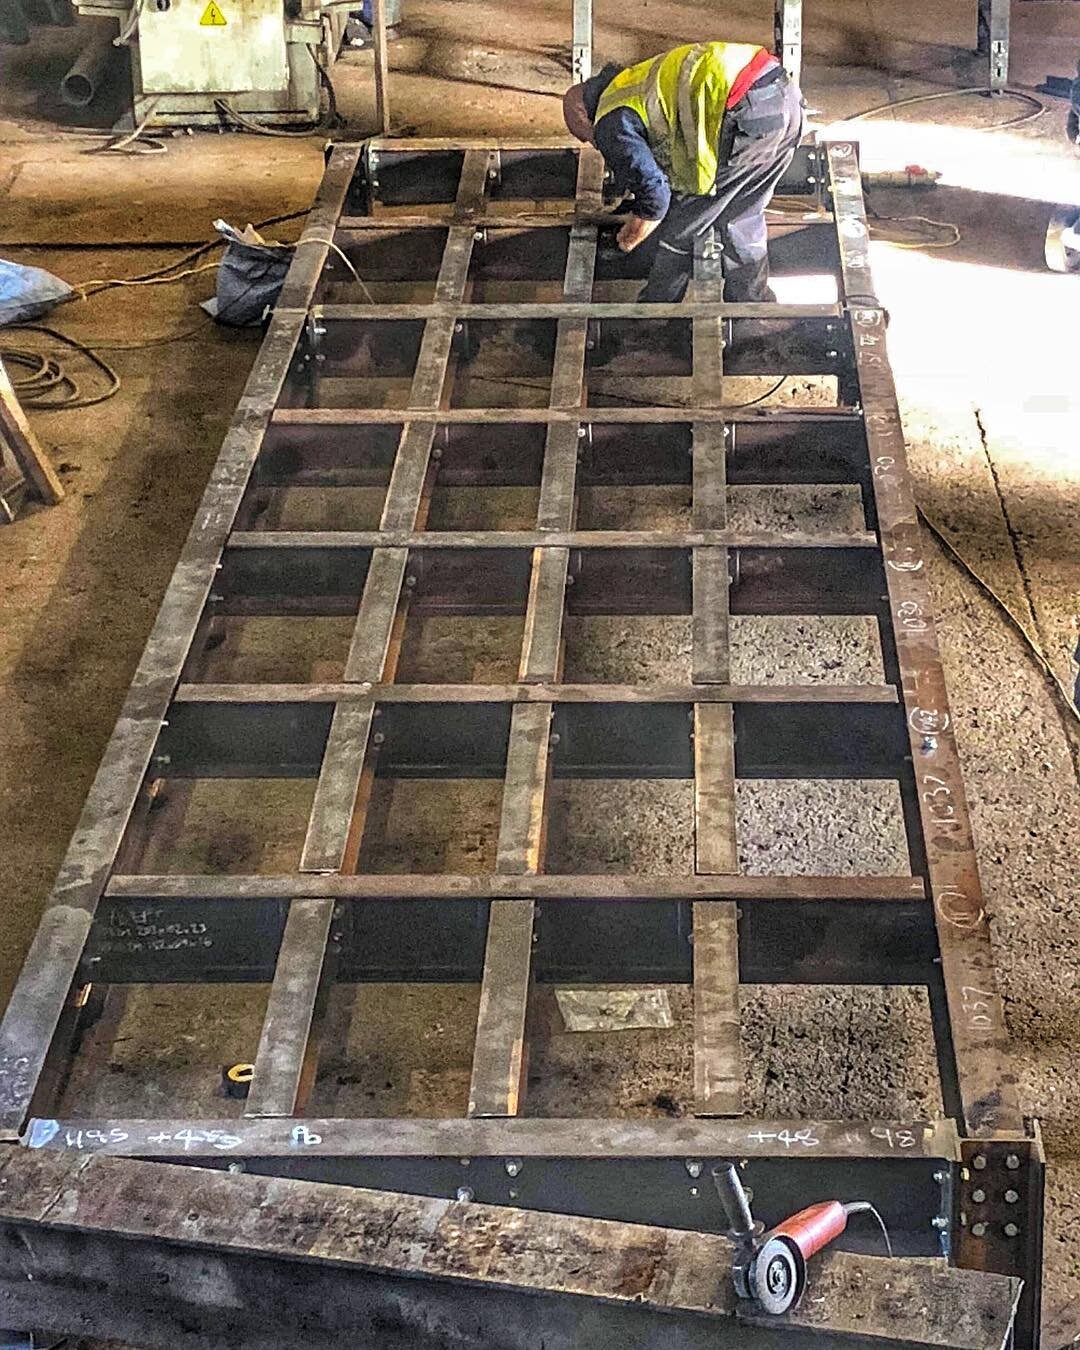 One of our mezzanine floor designs in production #mezzanine #steelwork #fabrication #steel #engineering #welding #structuralengineering